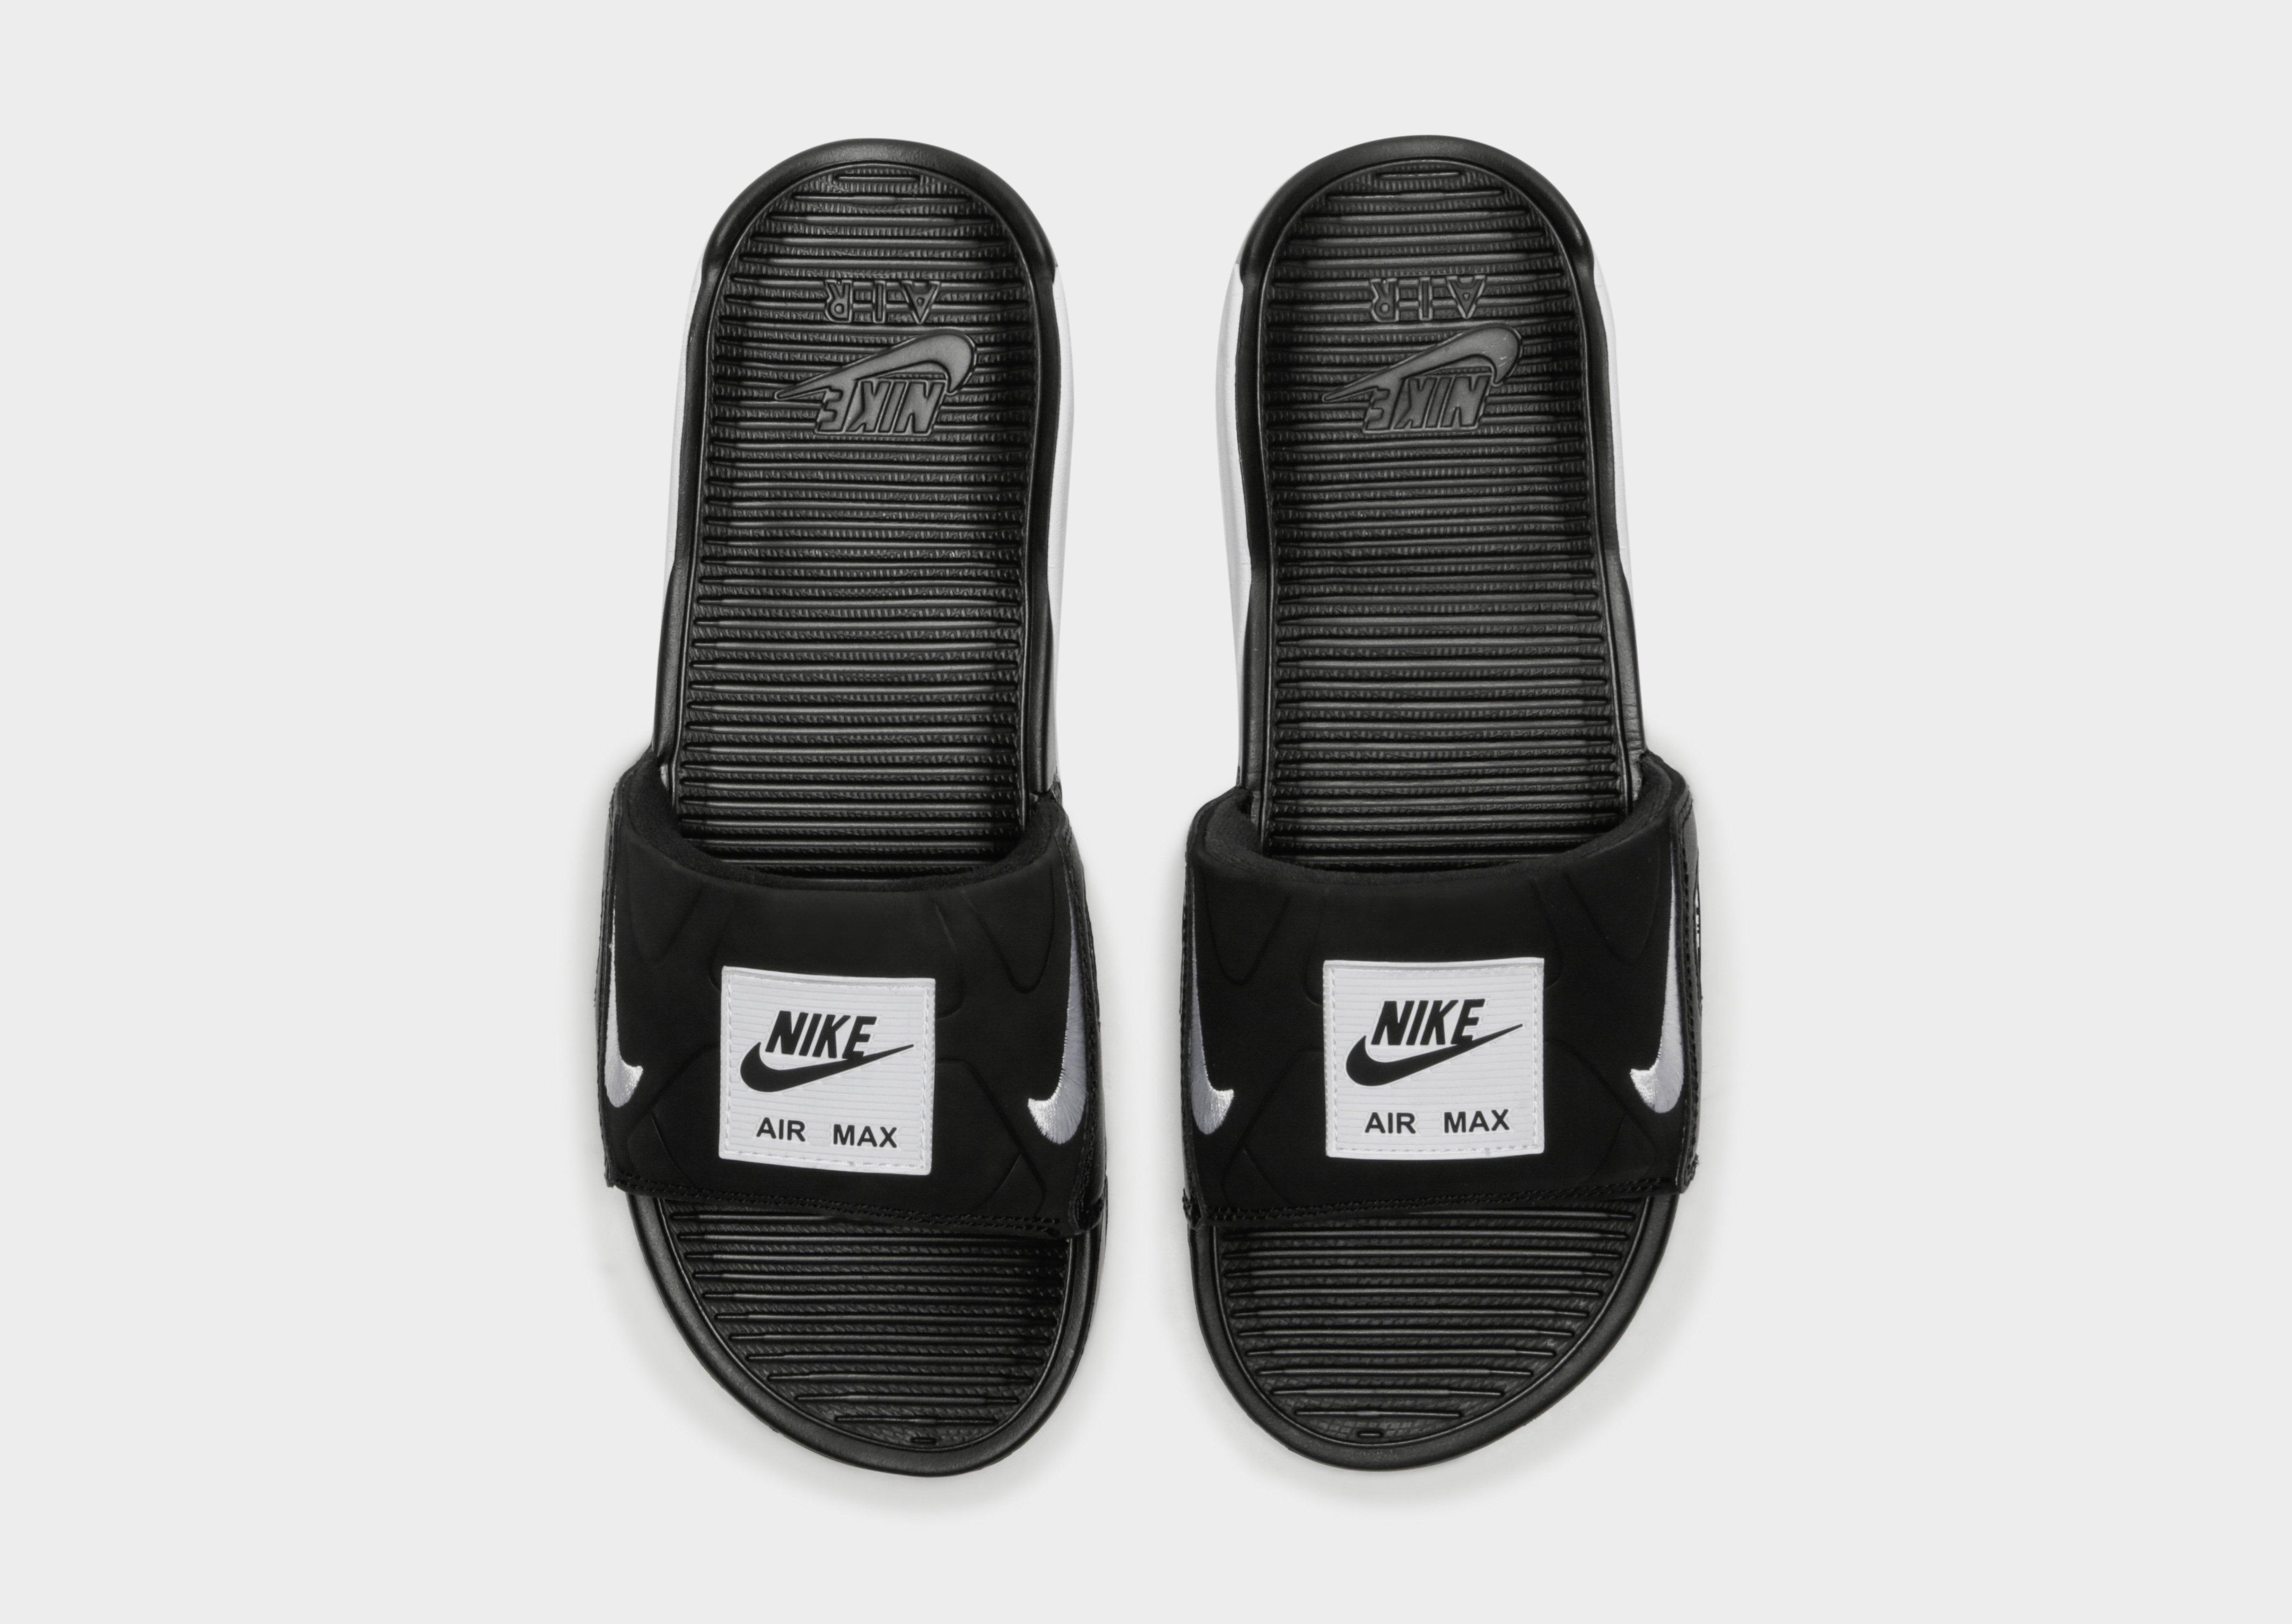 size 11 nike air max 90 slide sandals